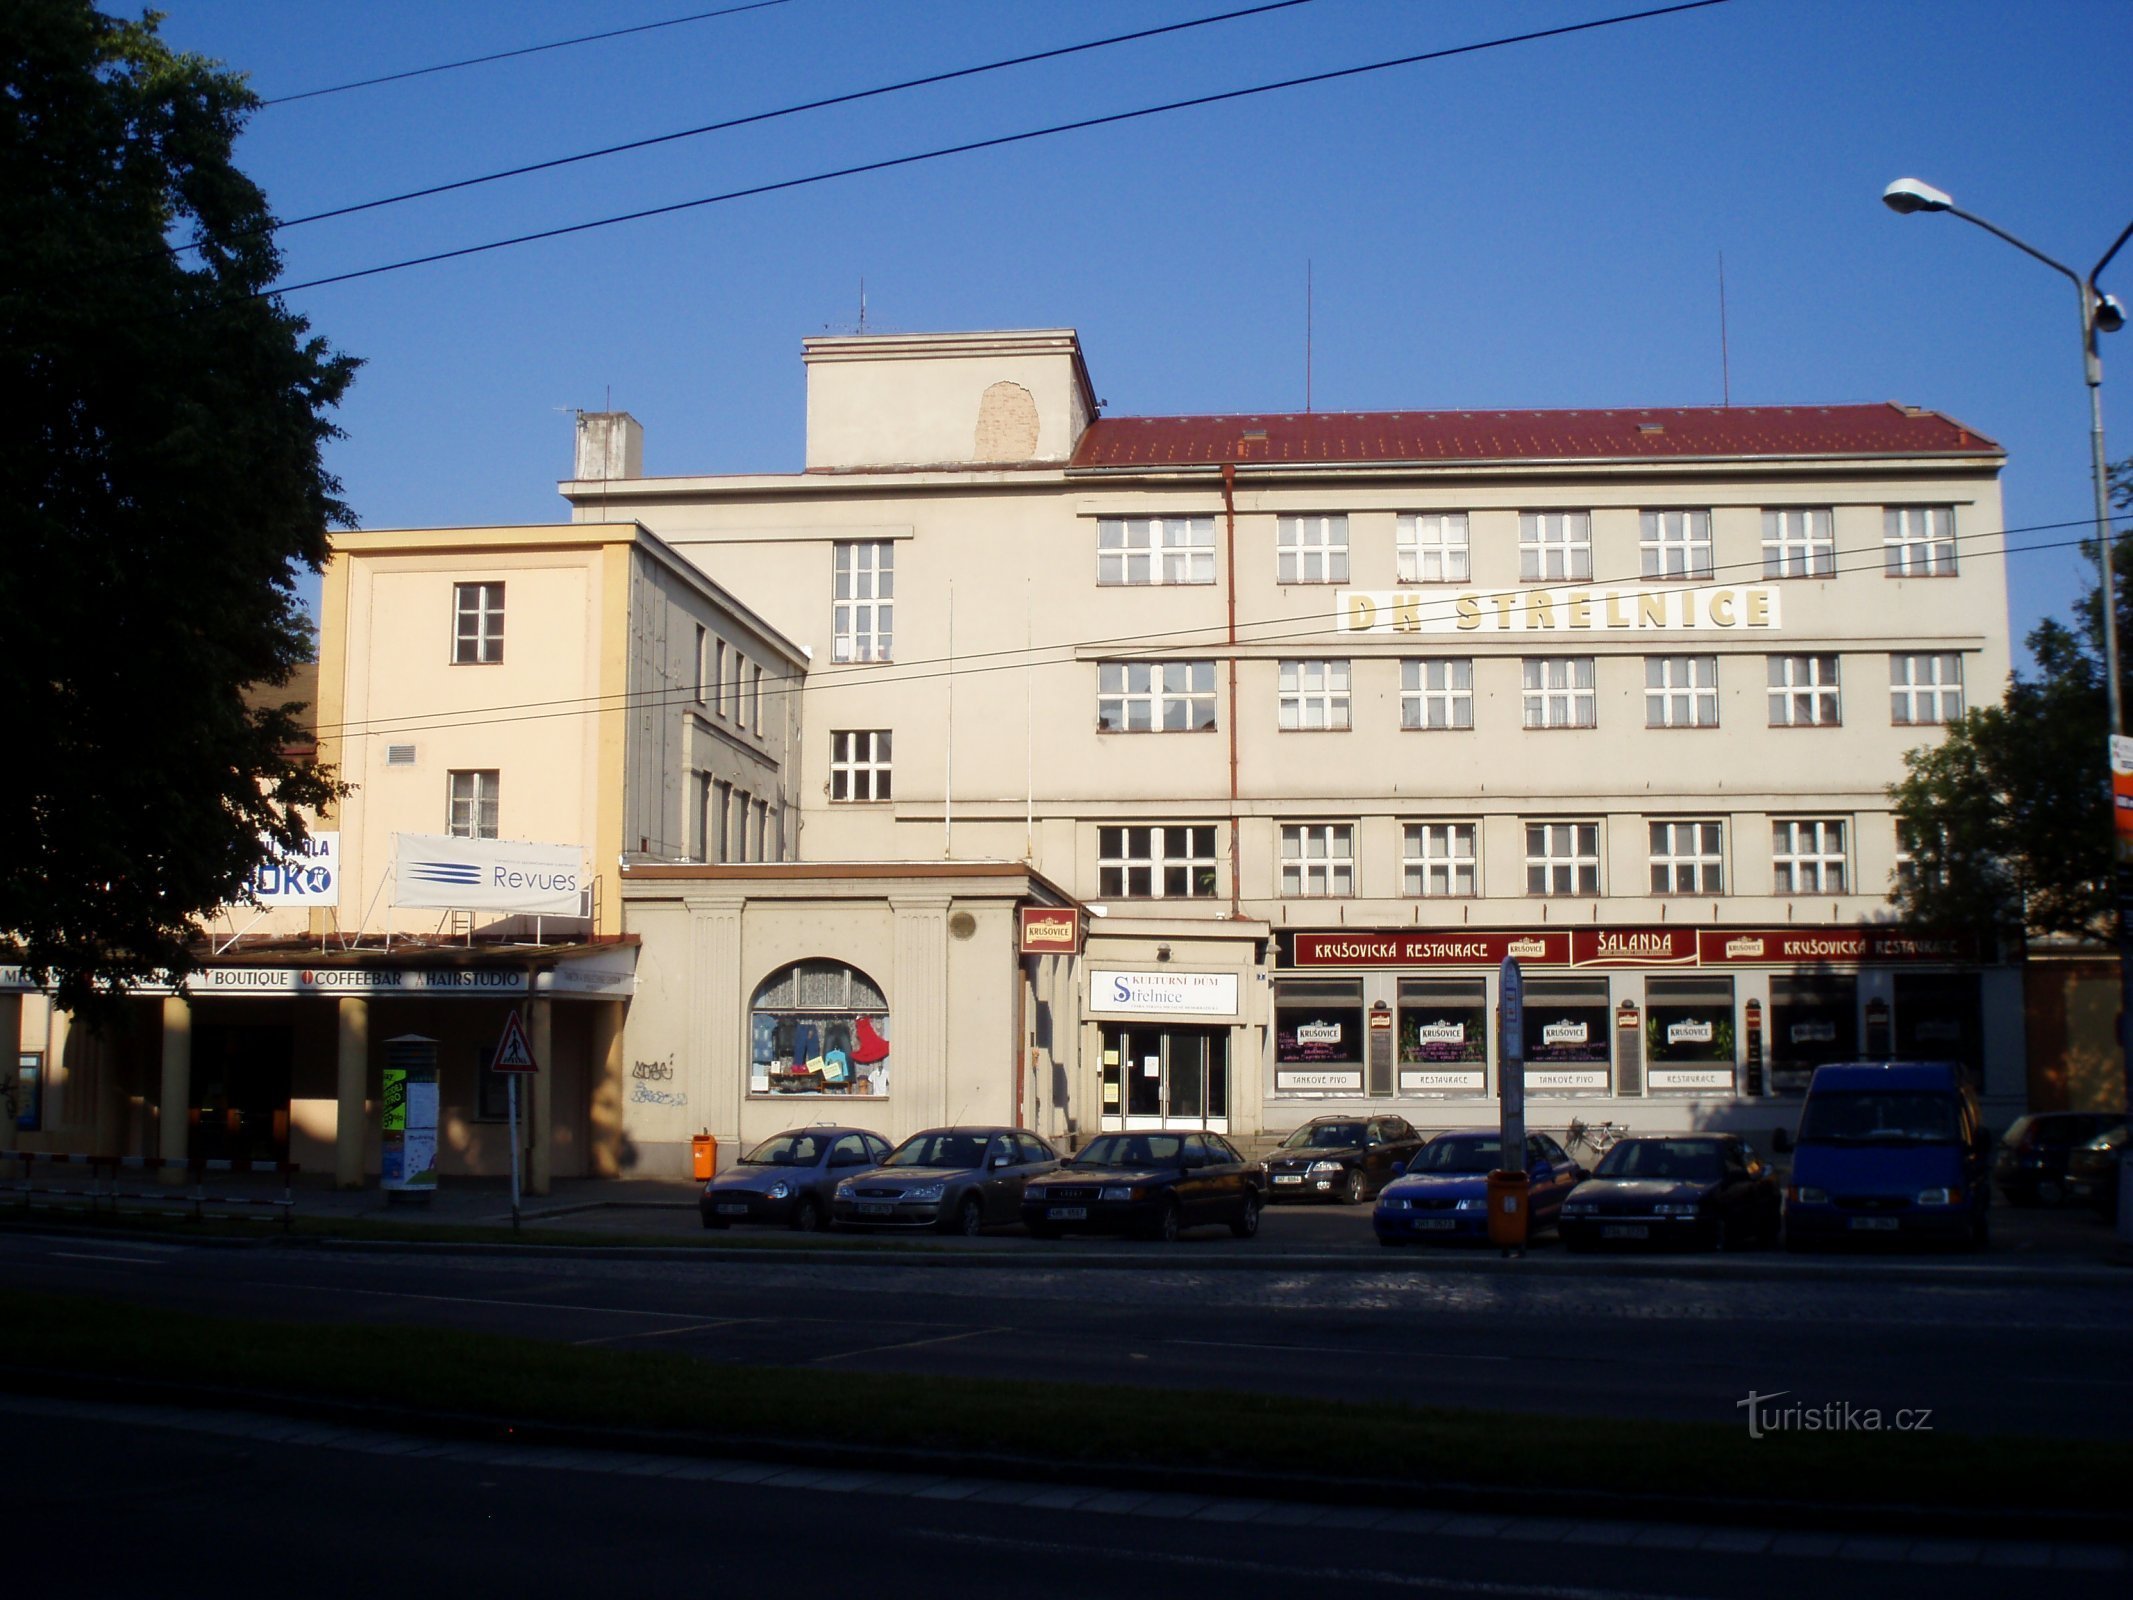 L'aspetto attuale del poligono di tiro (Hradec Králové, 11.6.2011)